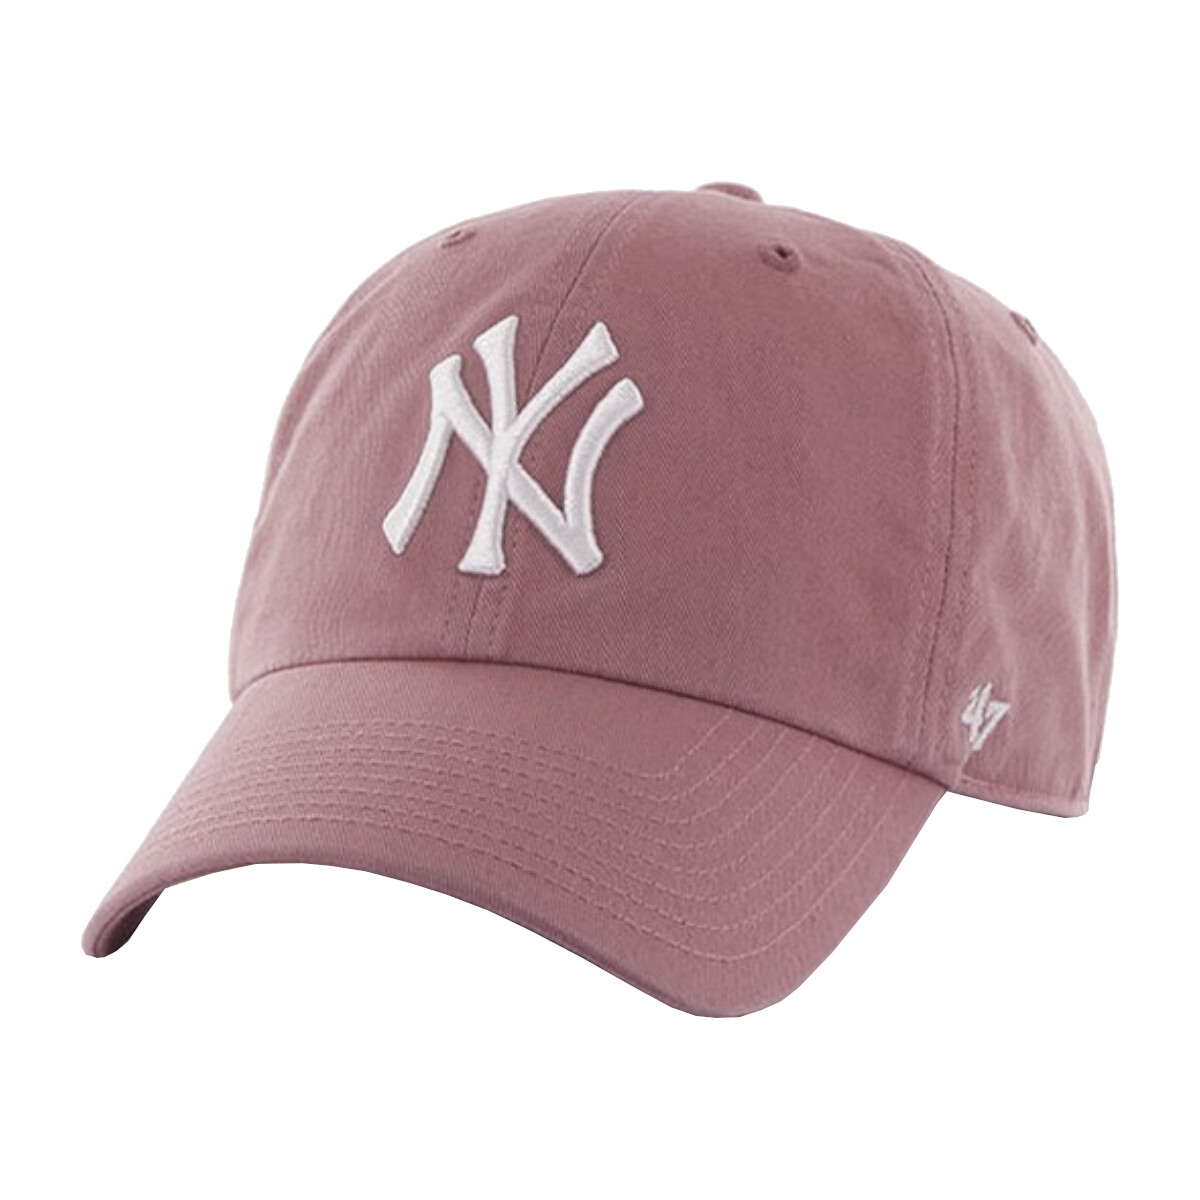 Accesorios textil Mujer Gorra '47 Brand New York Yankees MLB Clean Up Cap Rosa